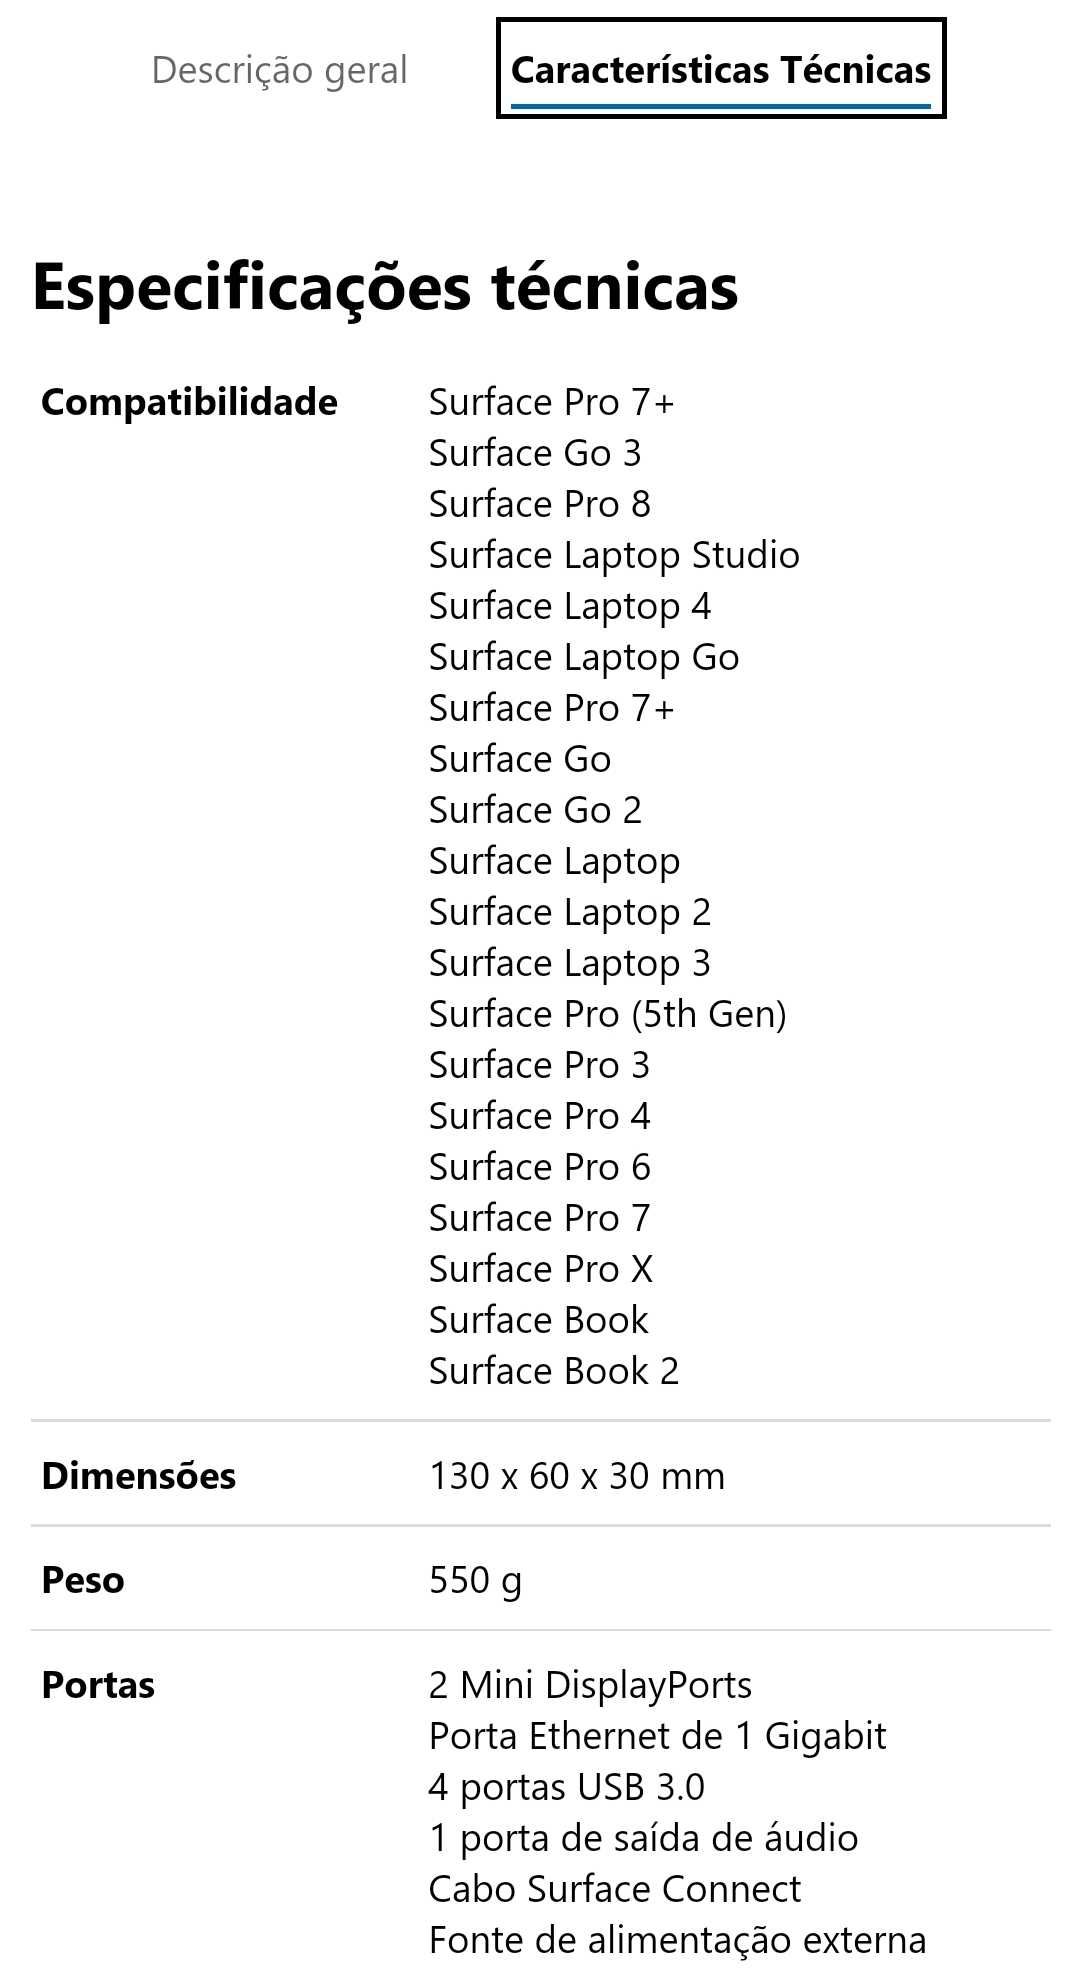 Microsoft Surface Dock Nova Na caixa